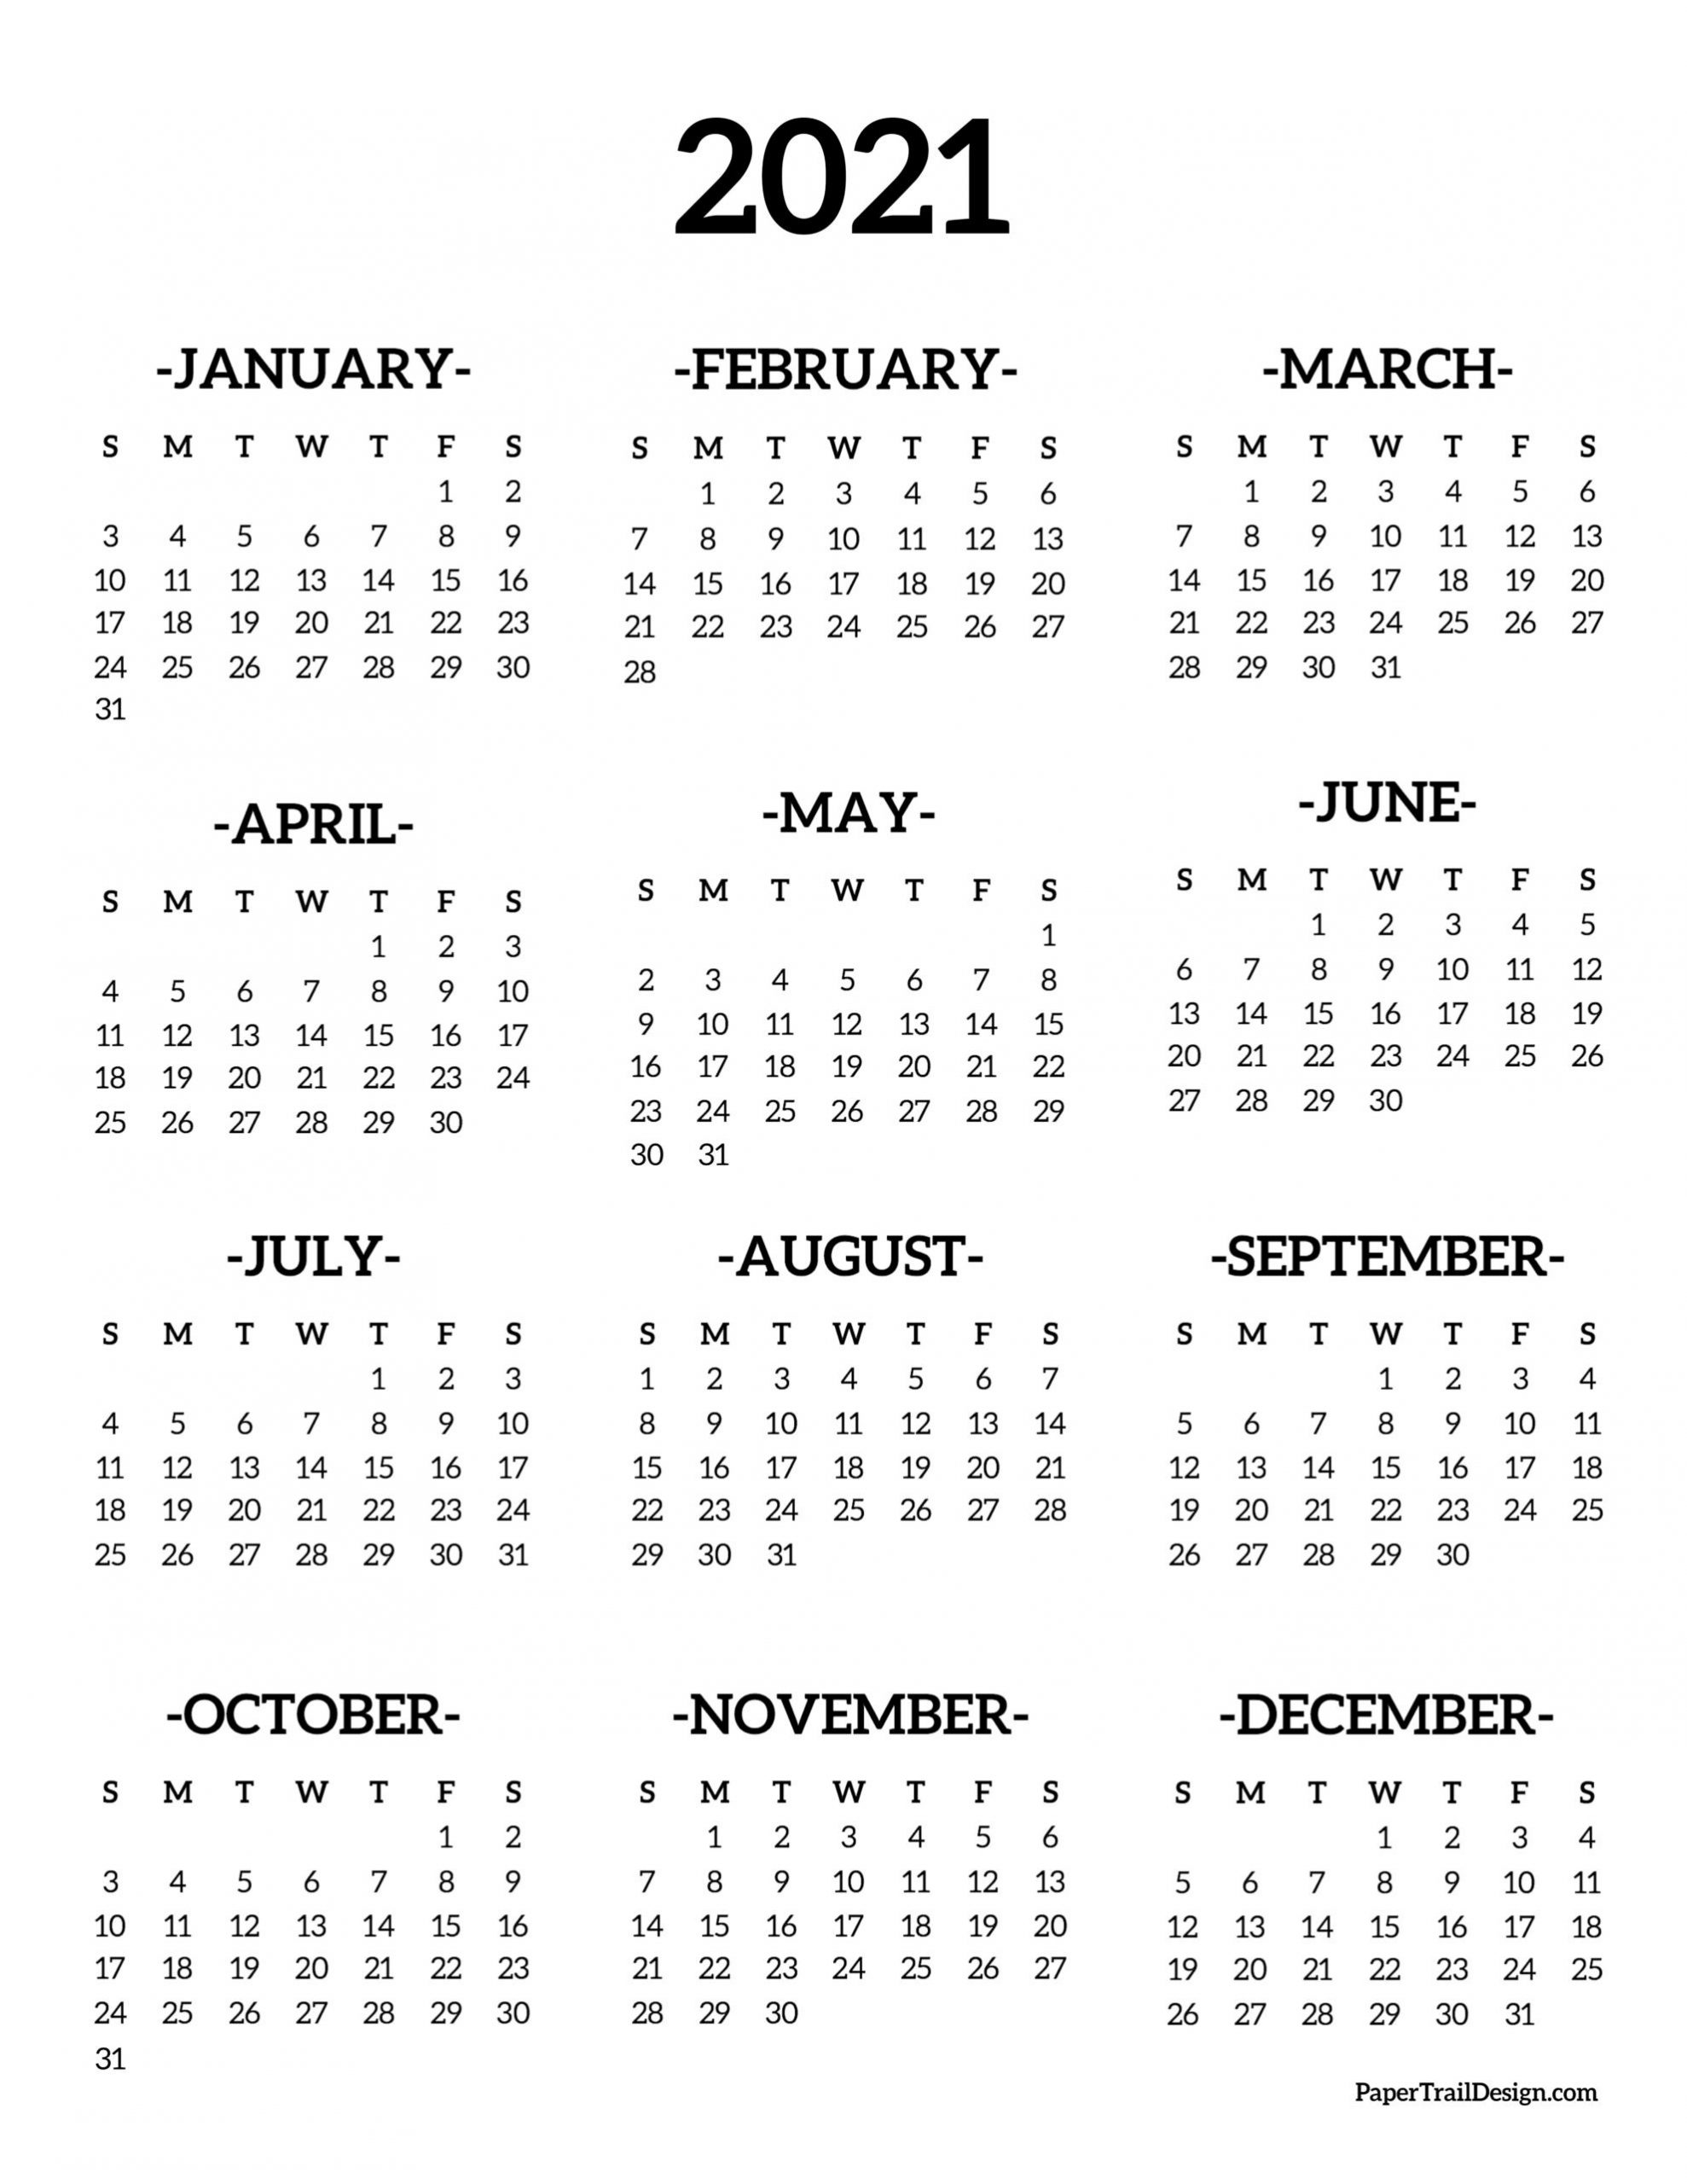 Calendar 2021 Printable One Page | Paper Trail Design-2021 Annual Calendar Printable Free